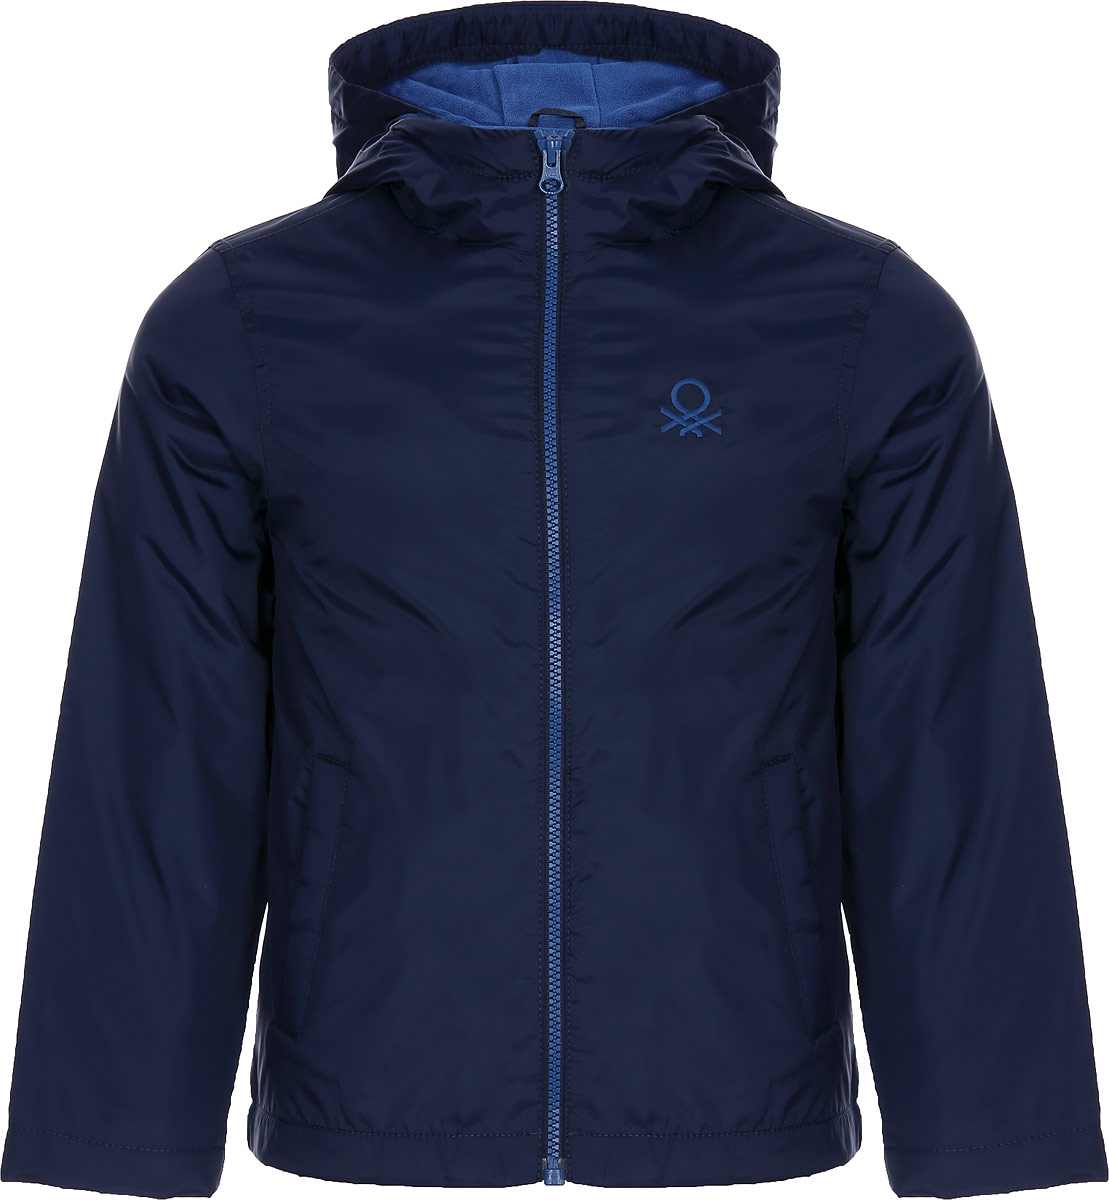 Куртка для мальчика United Colors of Benetton, цвет: синий. 2BL553CM0_13C. Размер 160